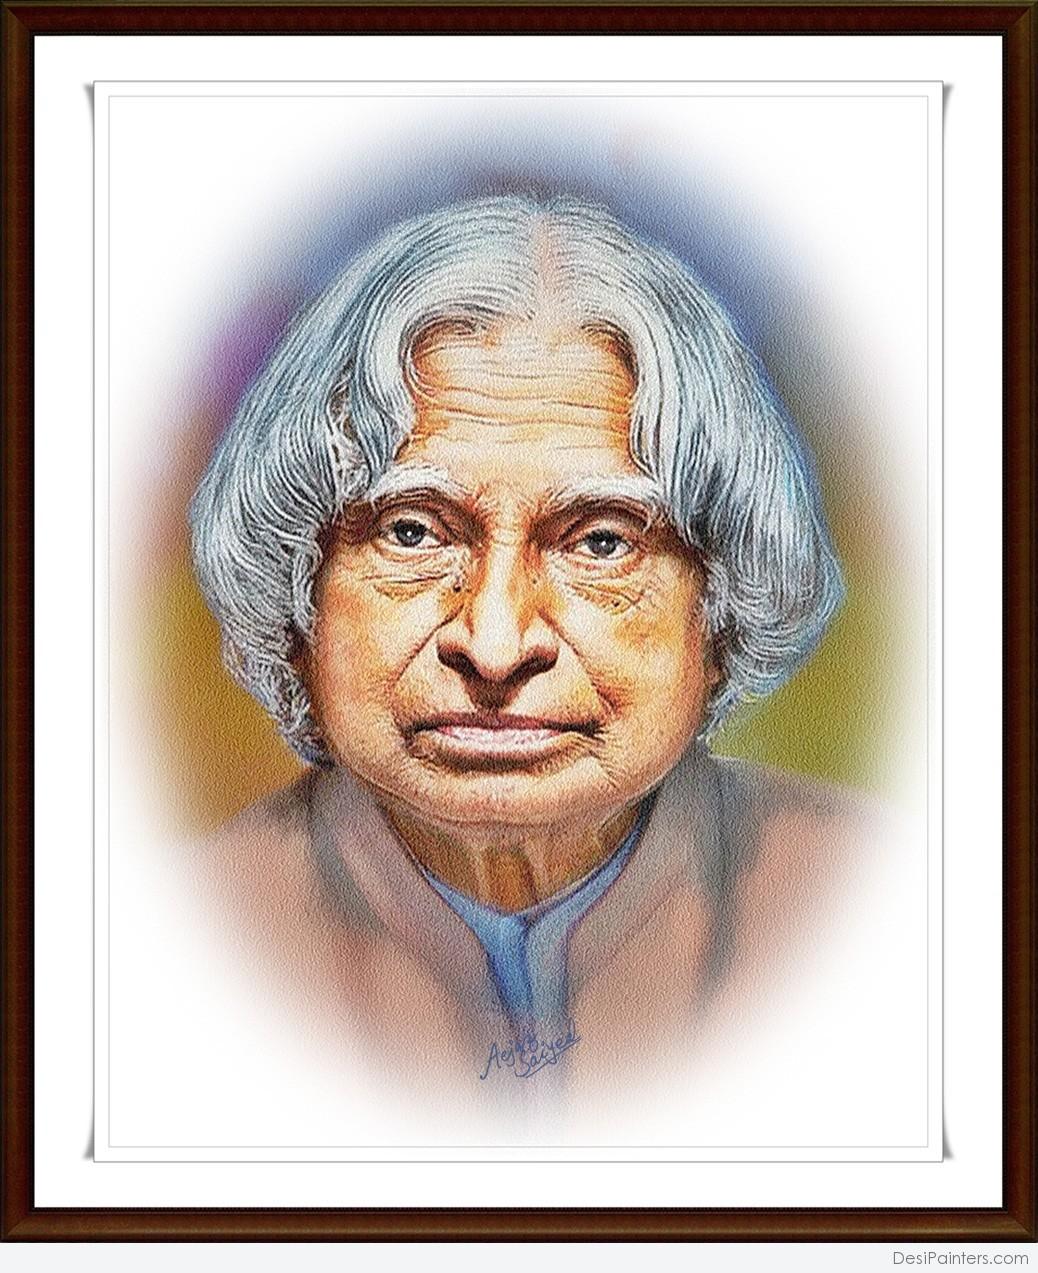 A P J Abdul Kalam Paintings | DesiPainters.com